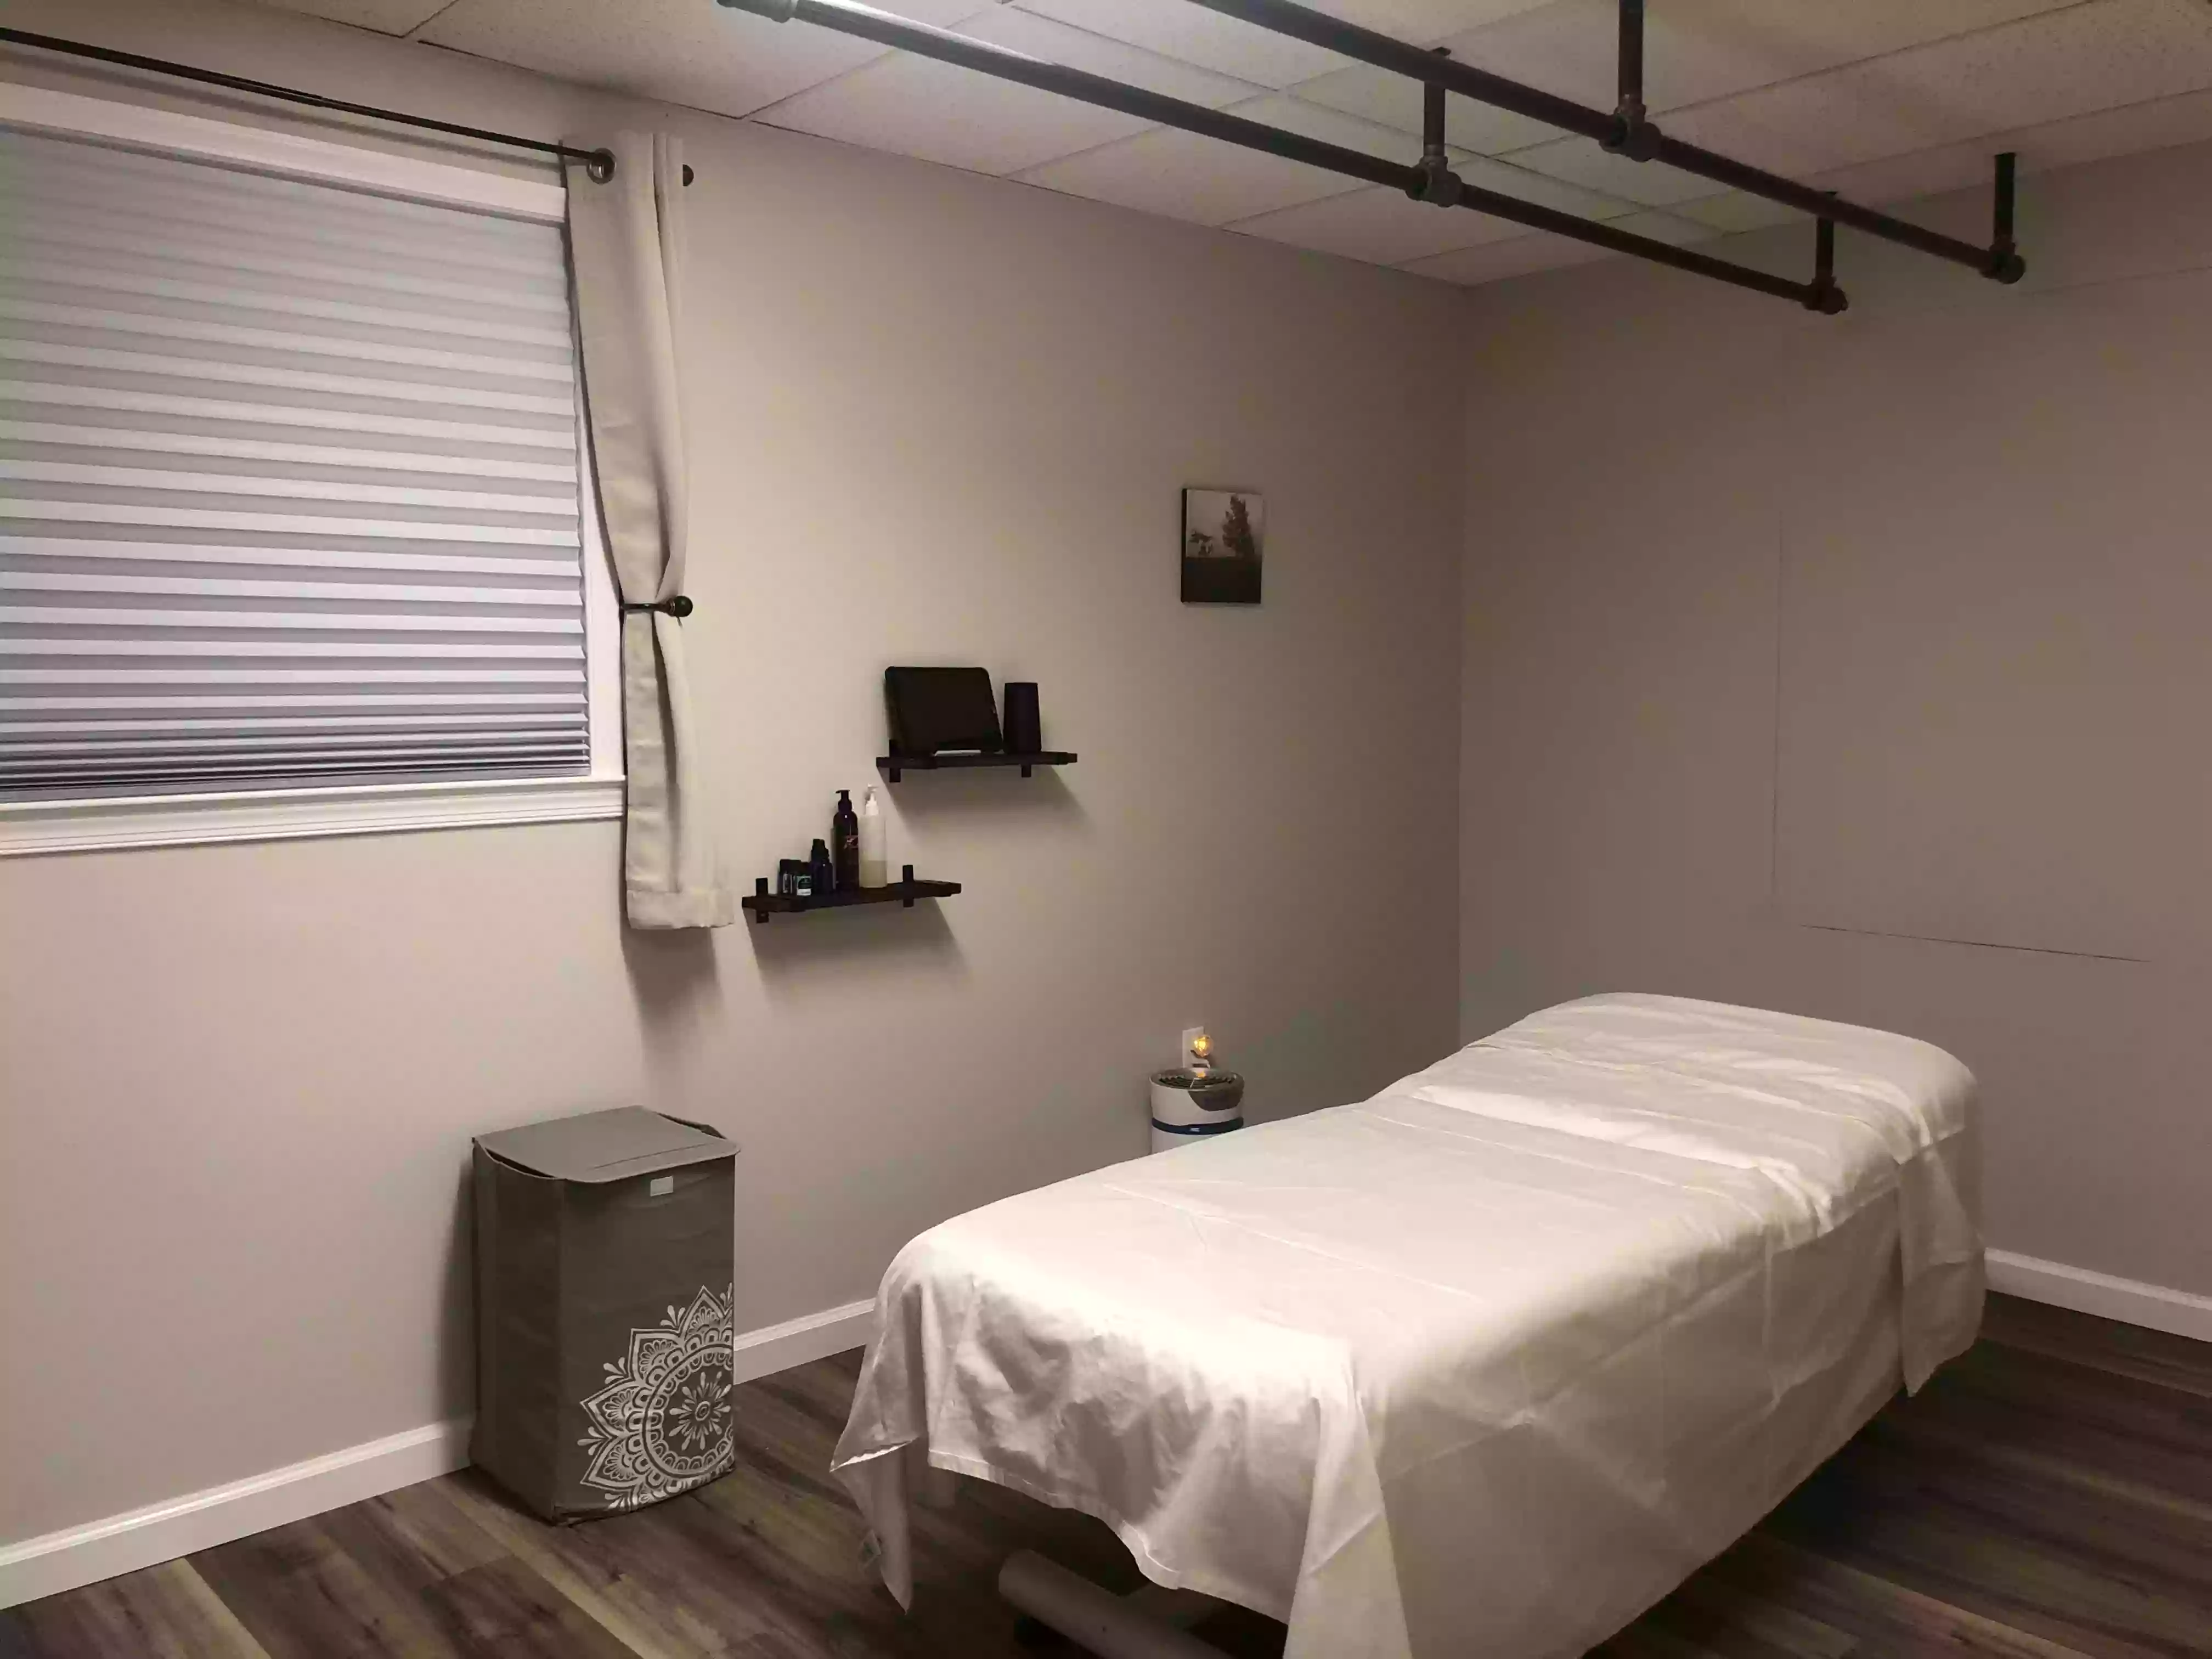 Body Mend Massage Therapy, LLC